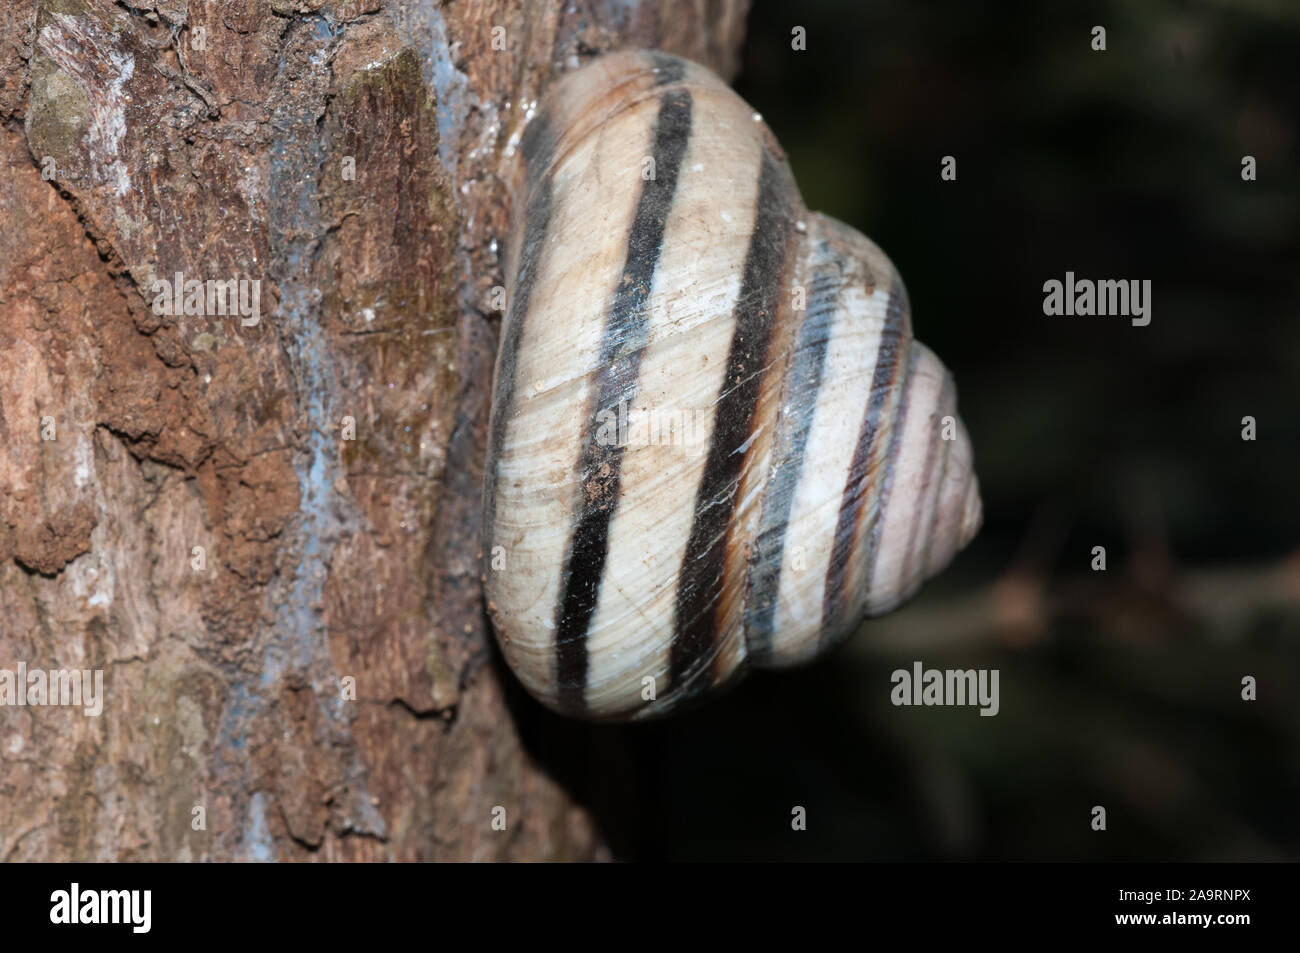 land snail, Asperitas inquinata, attached to a tree, Bali, Indonesia Stock Photo